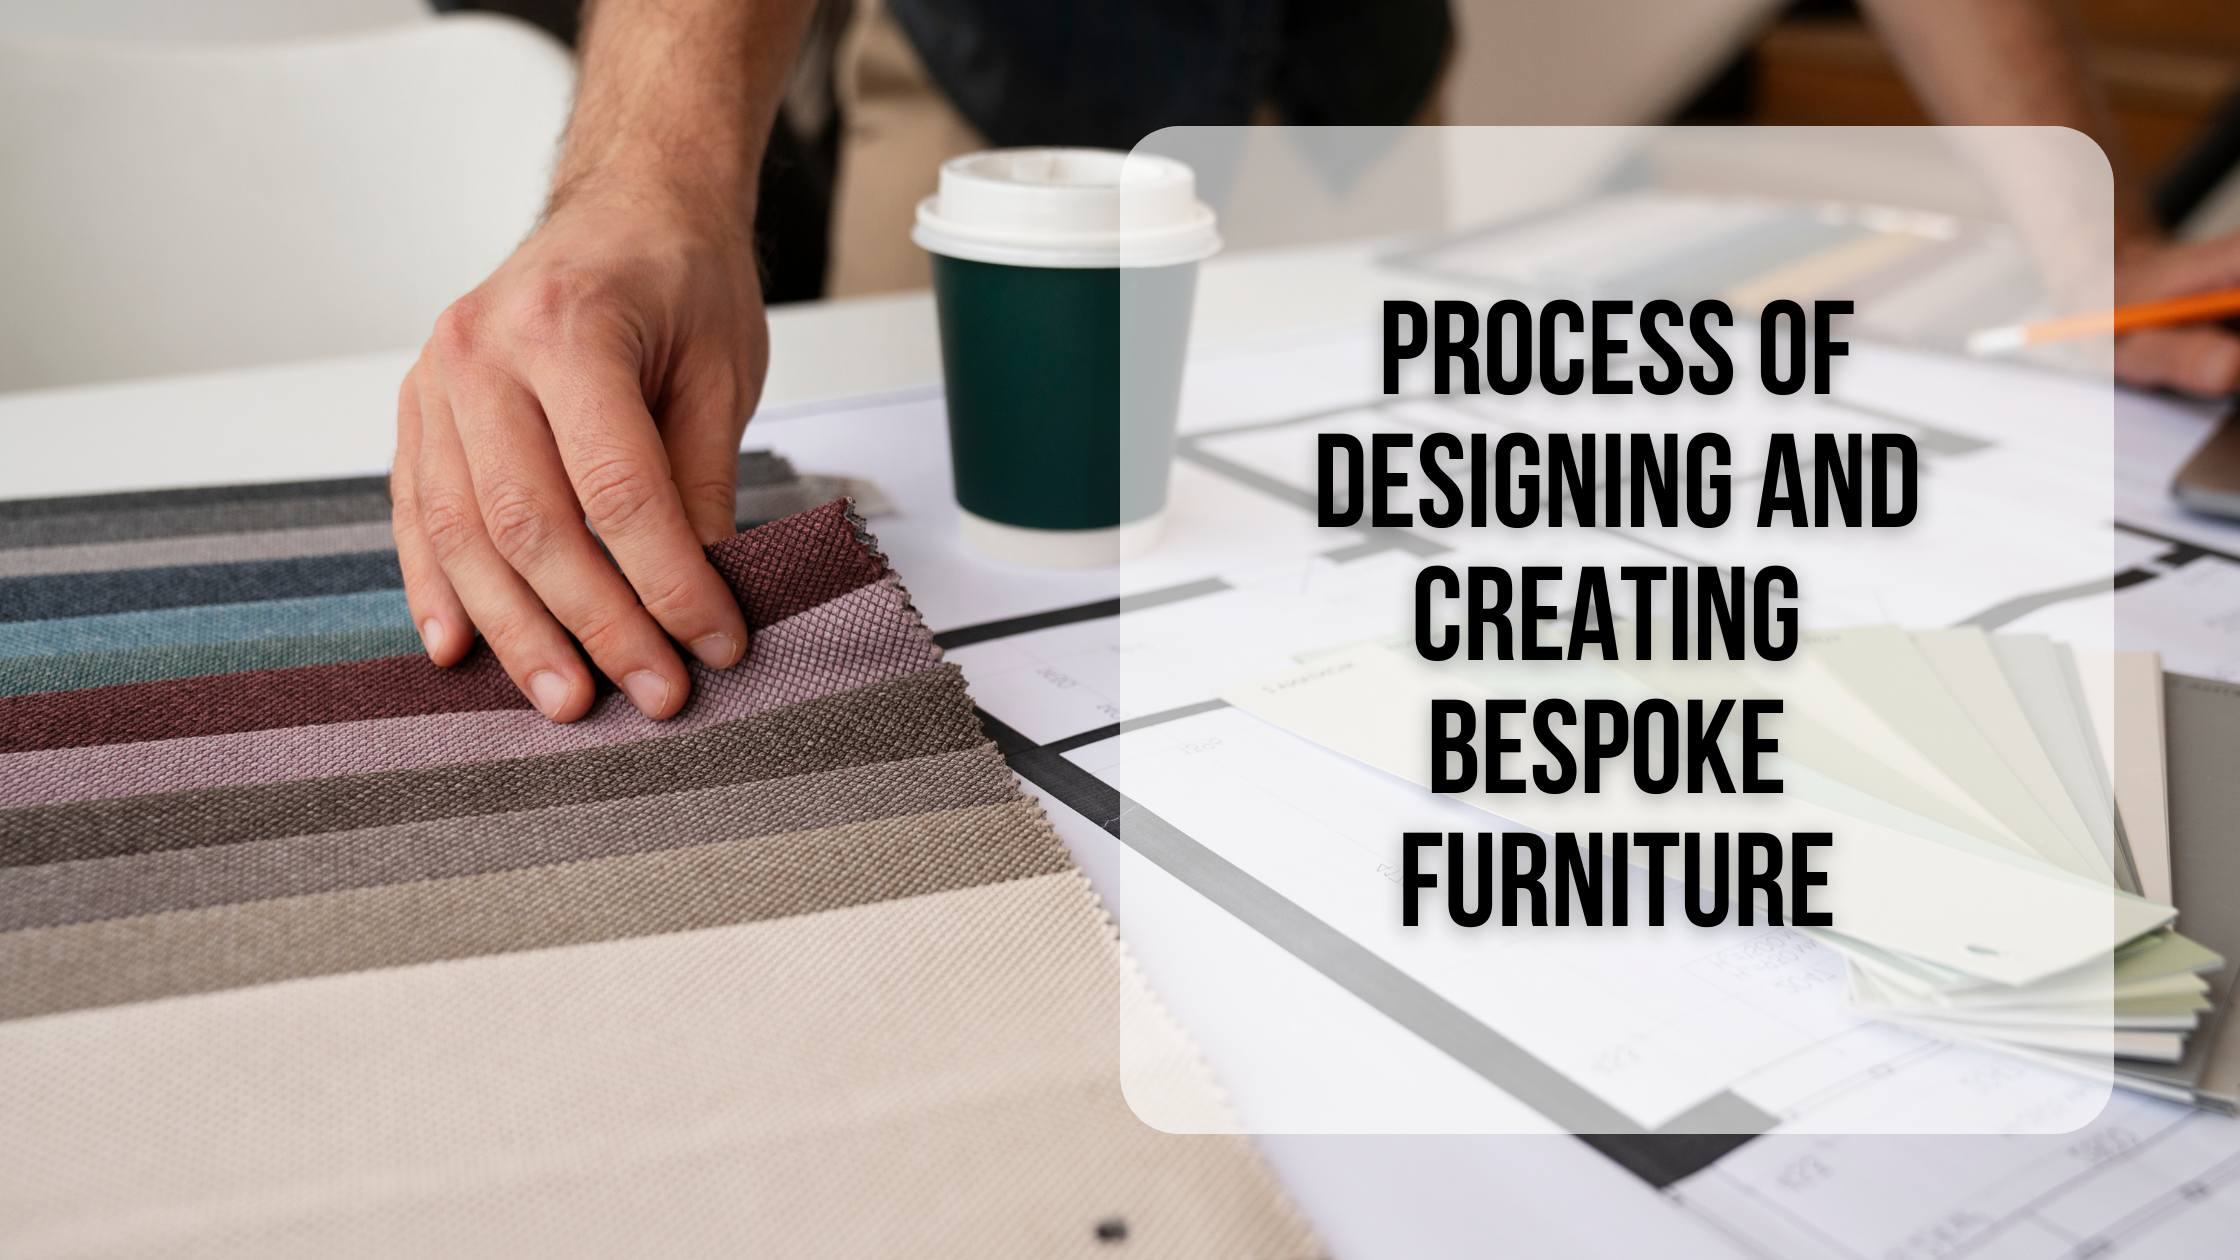 Process of designing and creating bespoke furniture